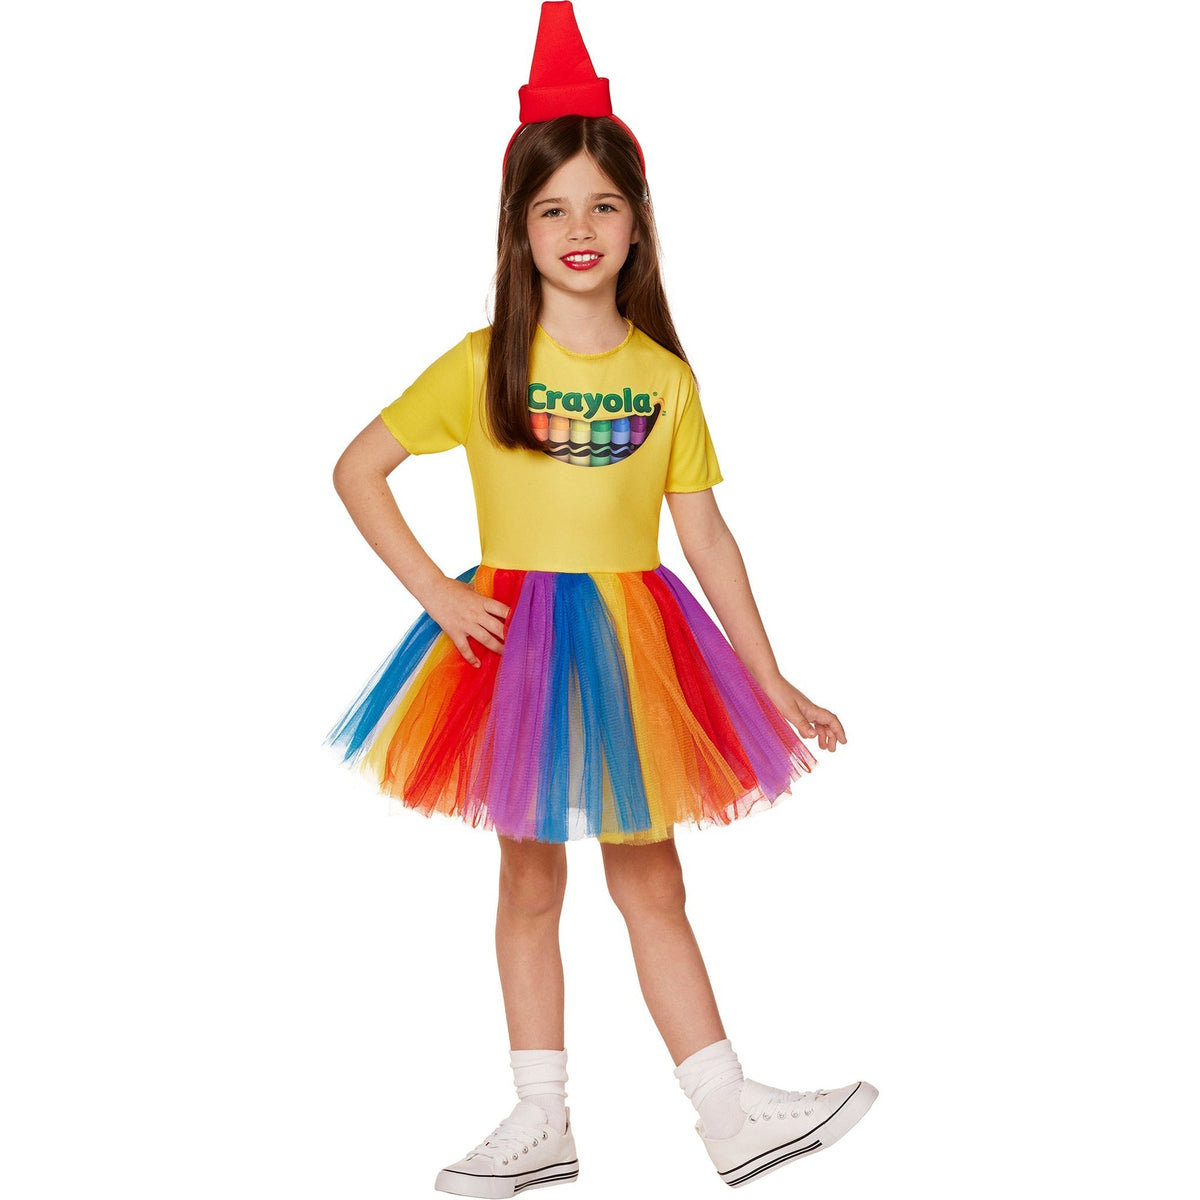 IN SPIRIT DESIGNS Costumes Crayola Box Costume for Kids, Crayola, Multicolor Dress